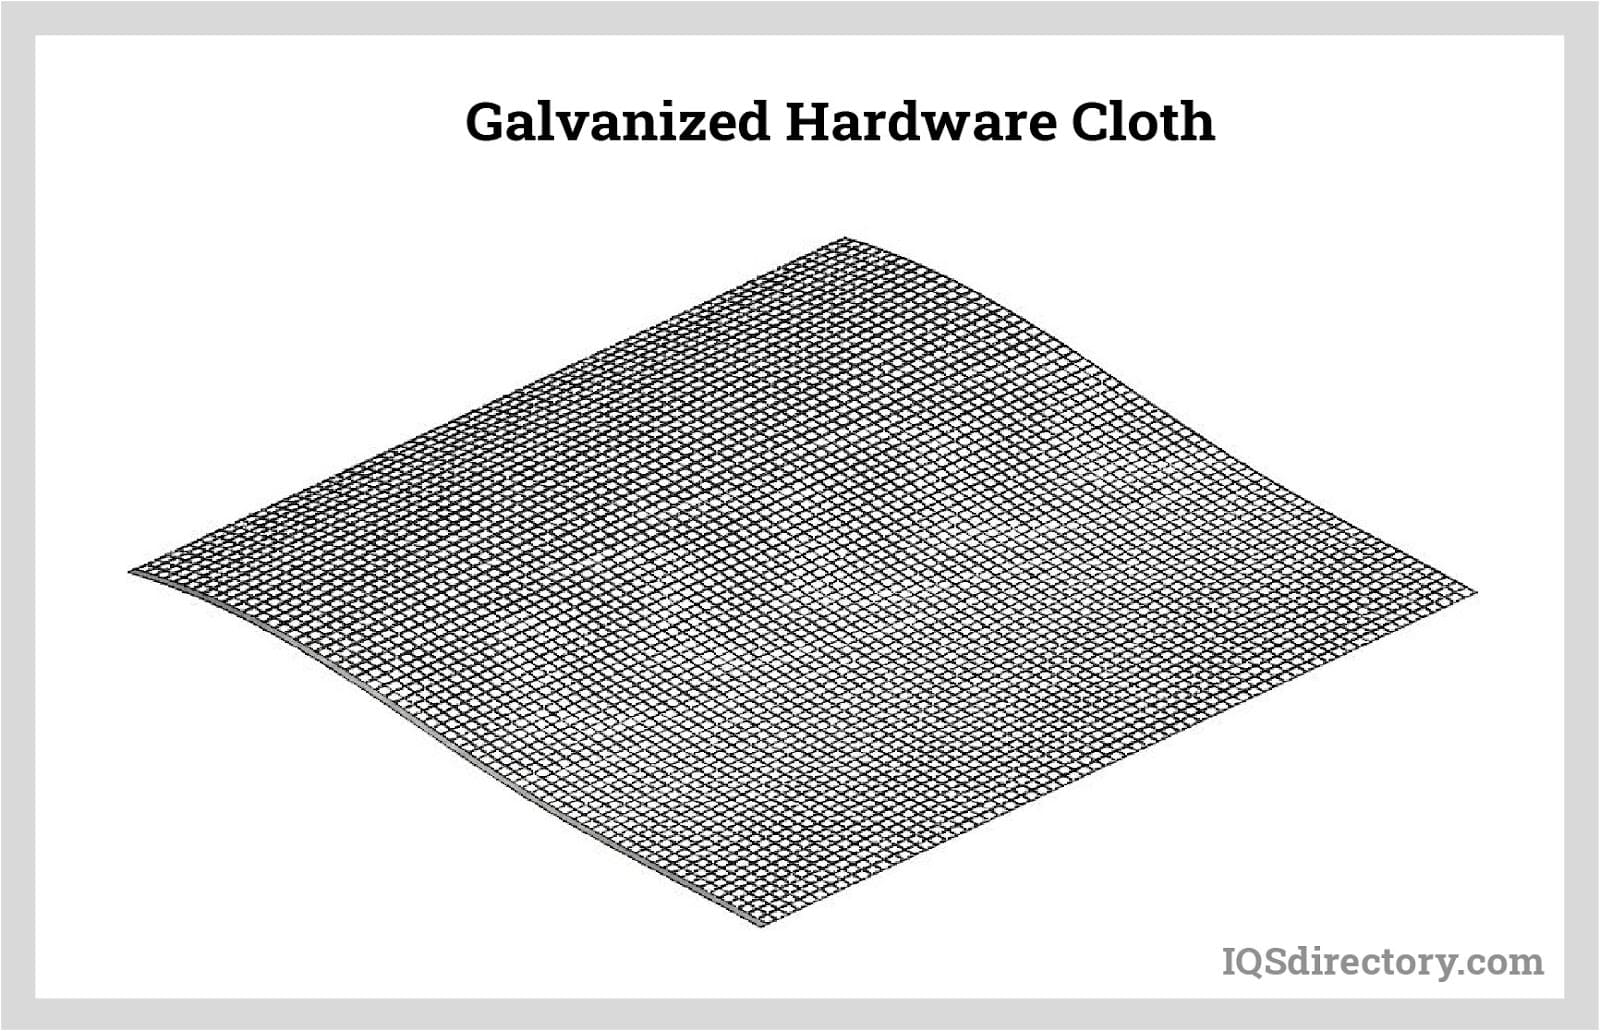 https://www.iqsdirectory.com/articles/wire-mesh/hardware-cloth/galvanized-hardware-cloth.jpg